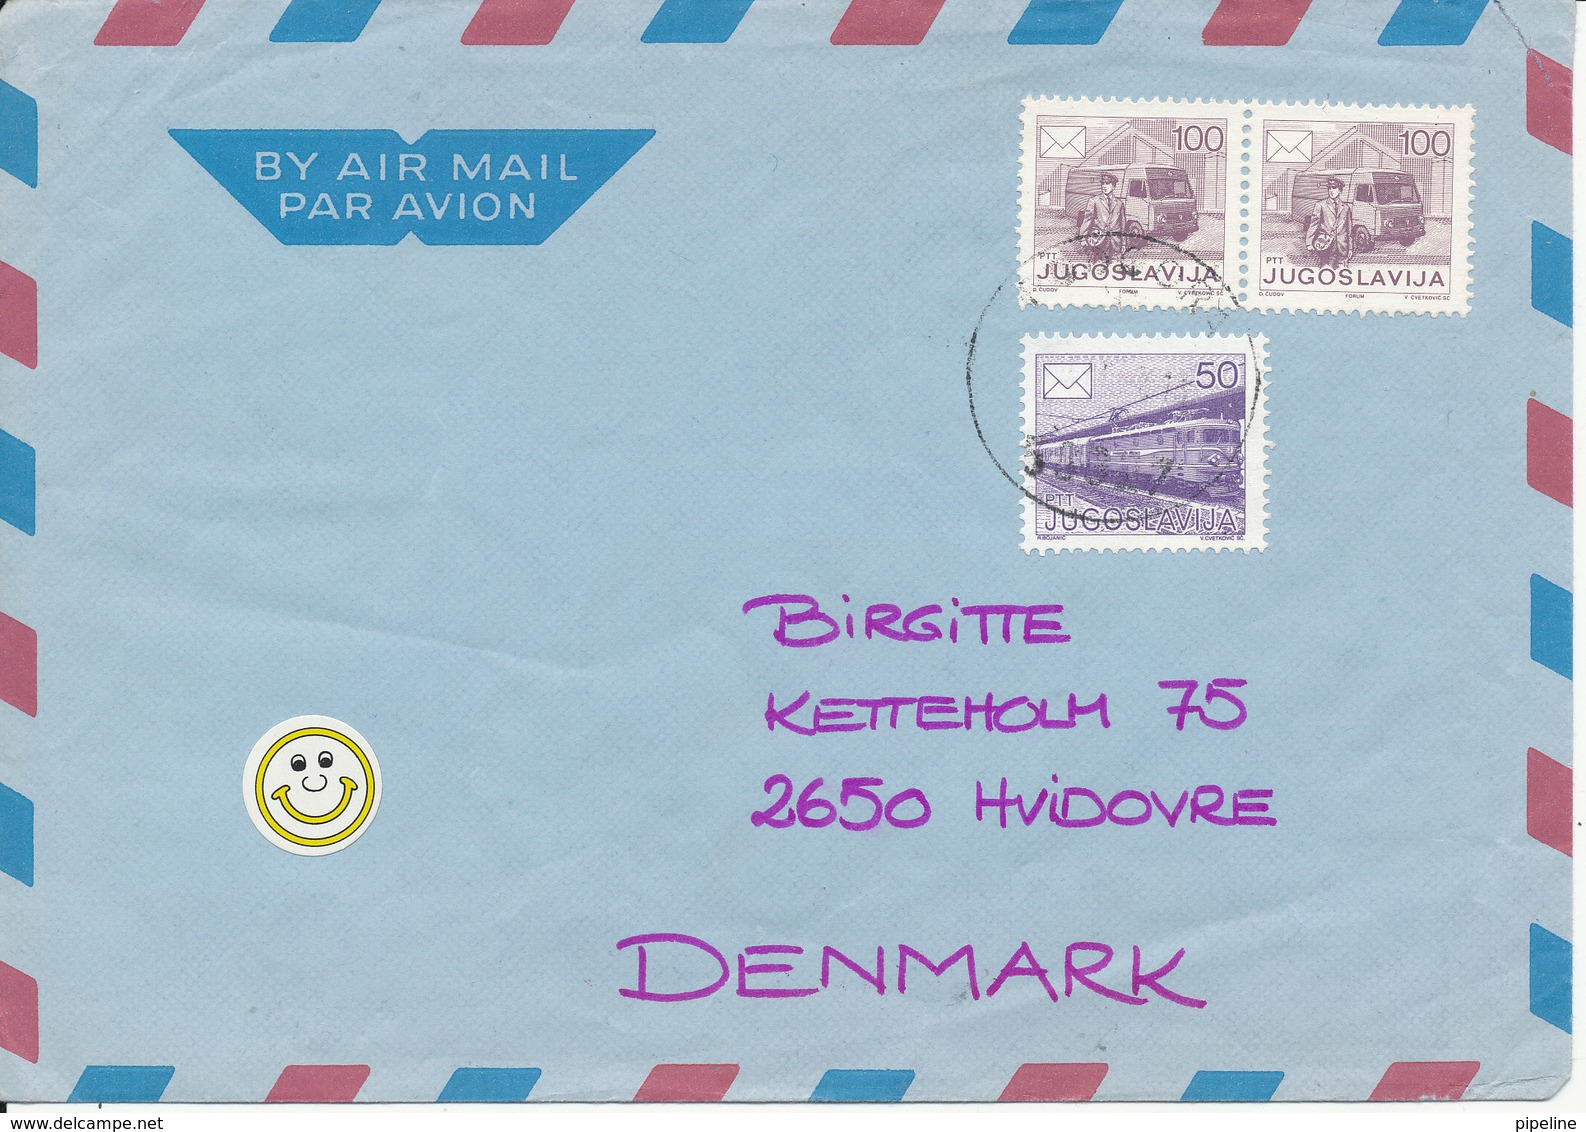 Yugoslavia Air Mail Cover Sent To Denmark - Airmail